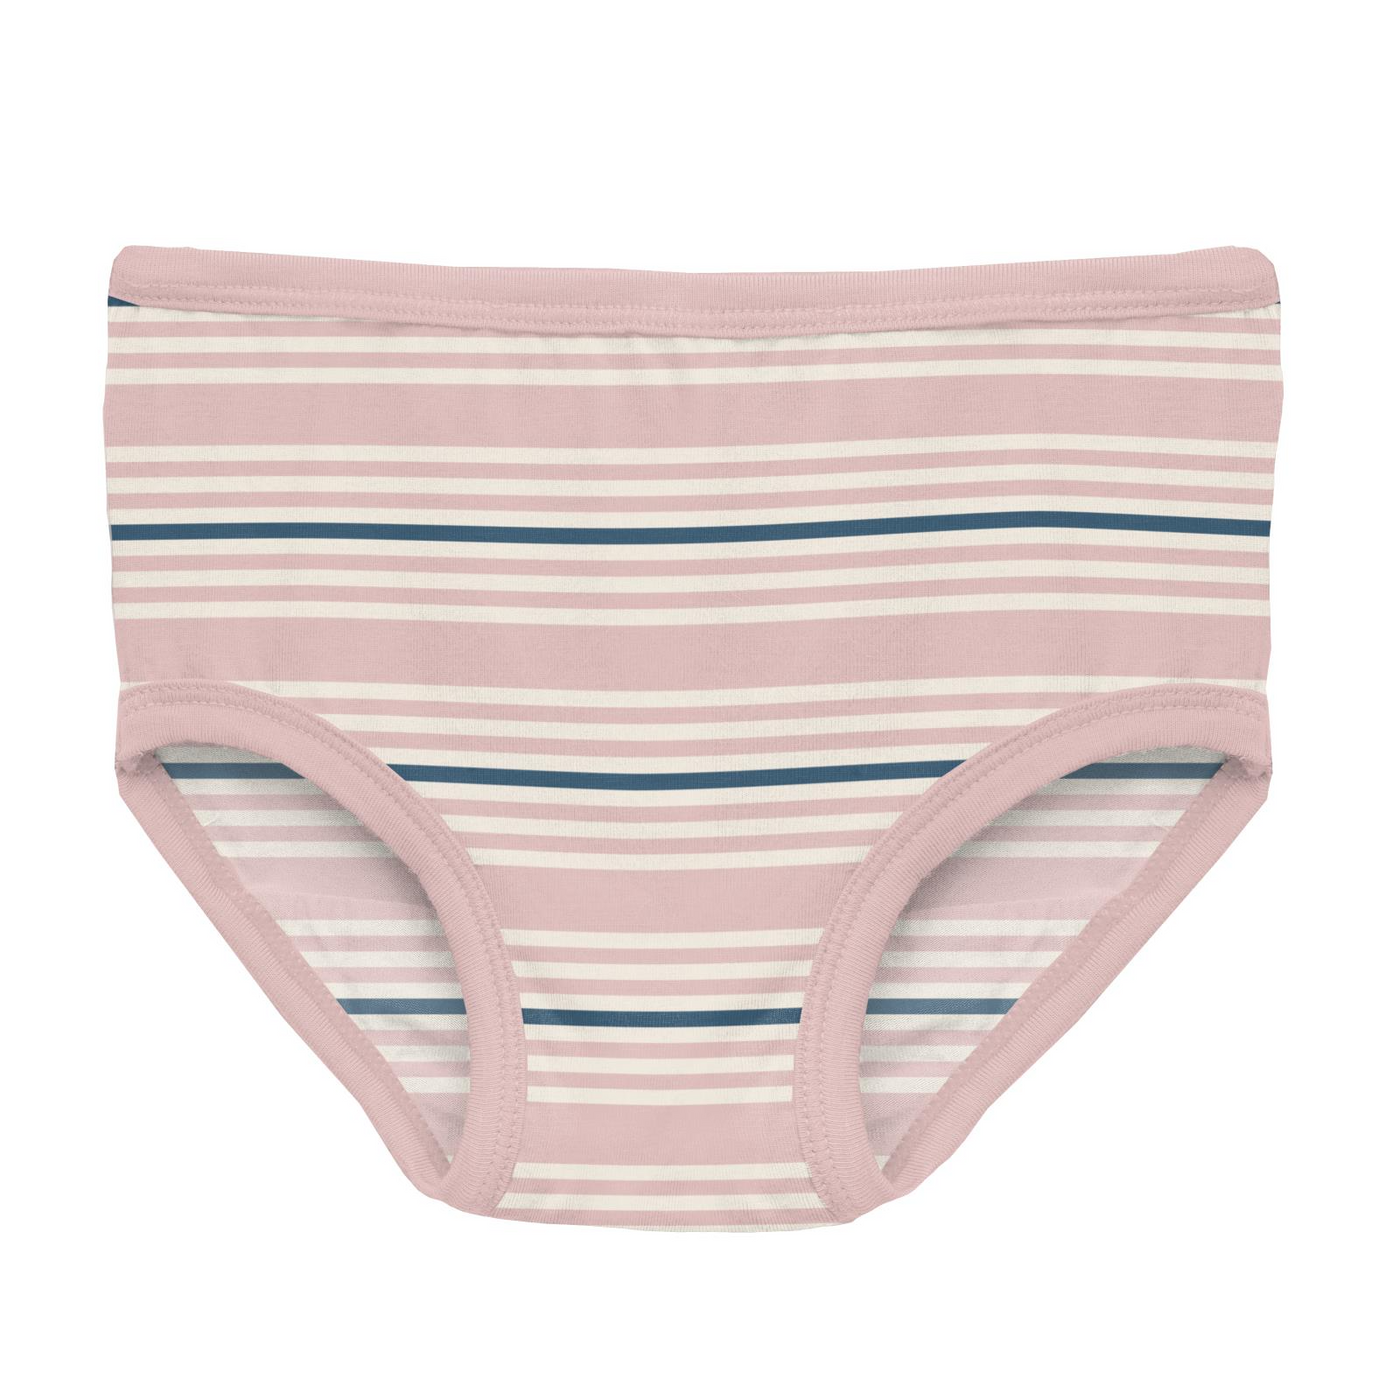 Kickee Pants Girl's Underwear: Flotsam Stripe